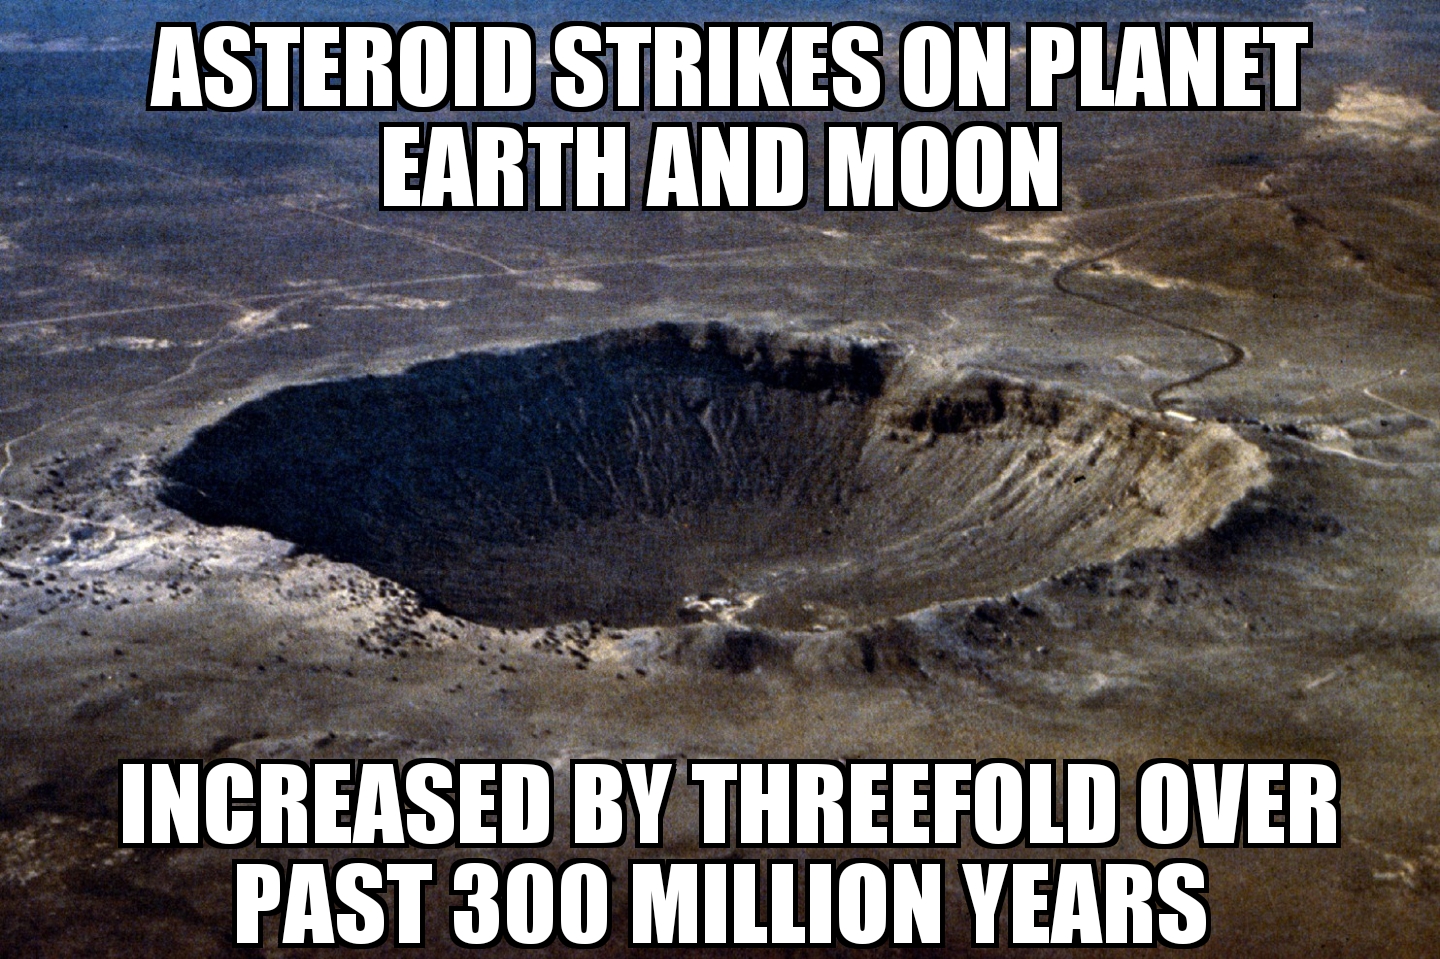 Asteroid strikes up threefold